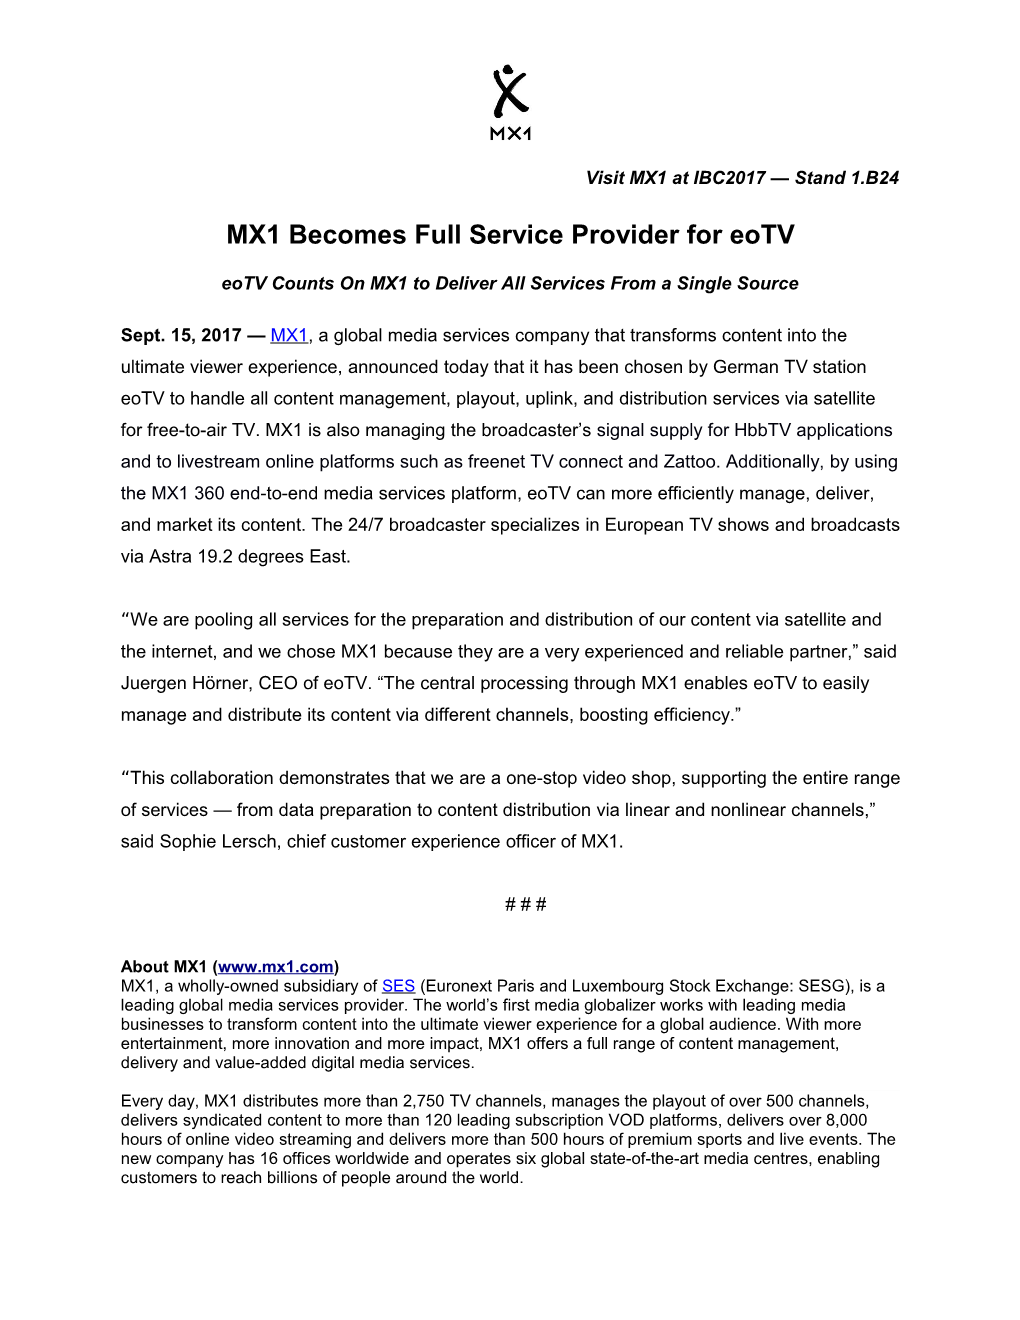 MX1 Becomes Full Service Provider for Eotv